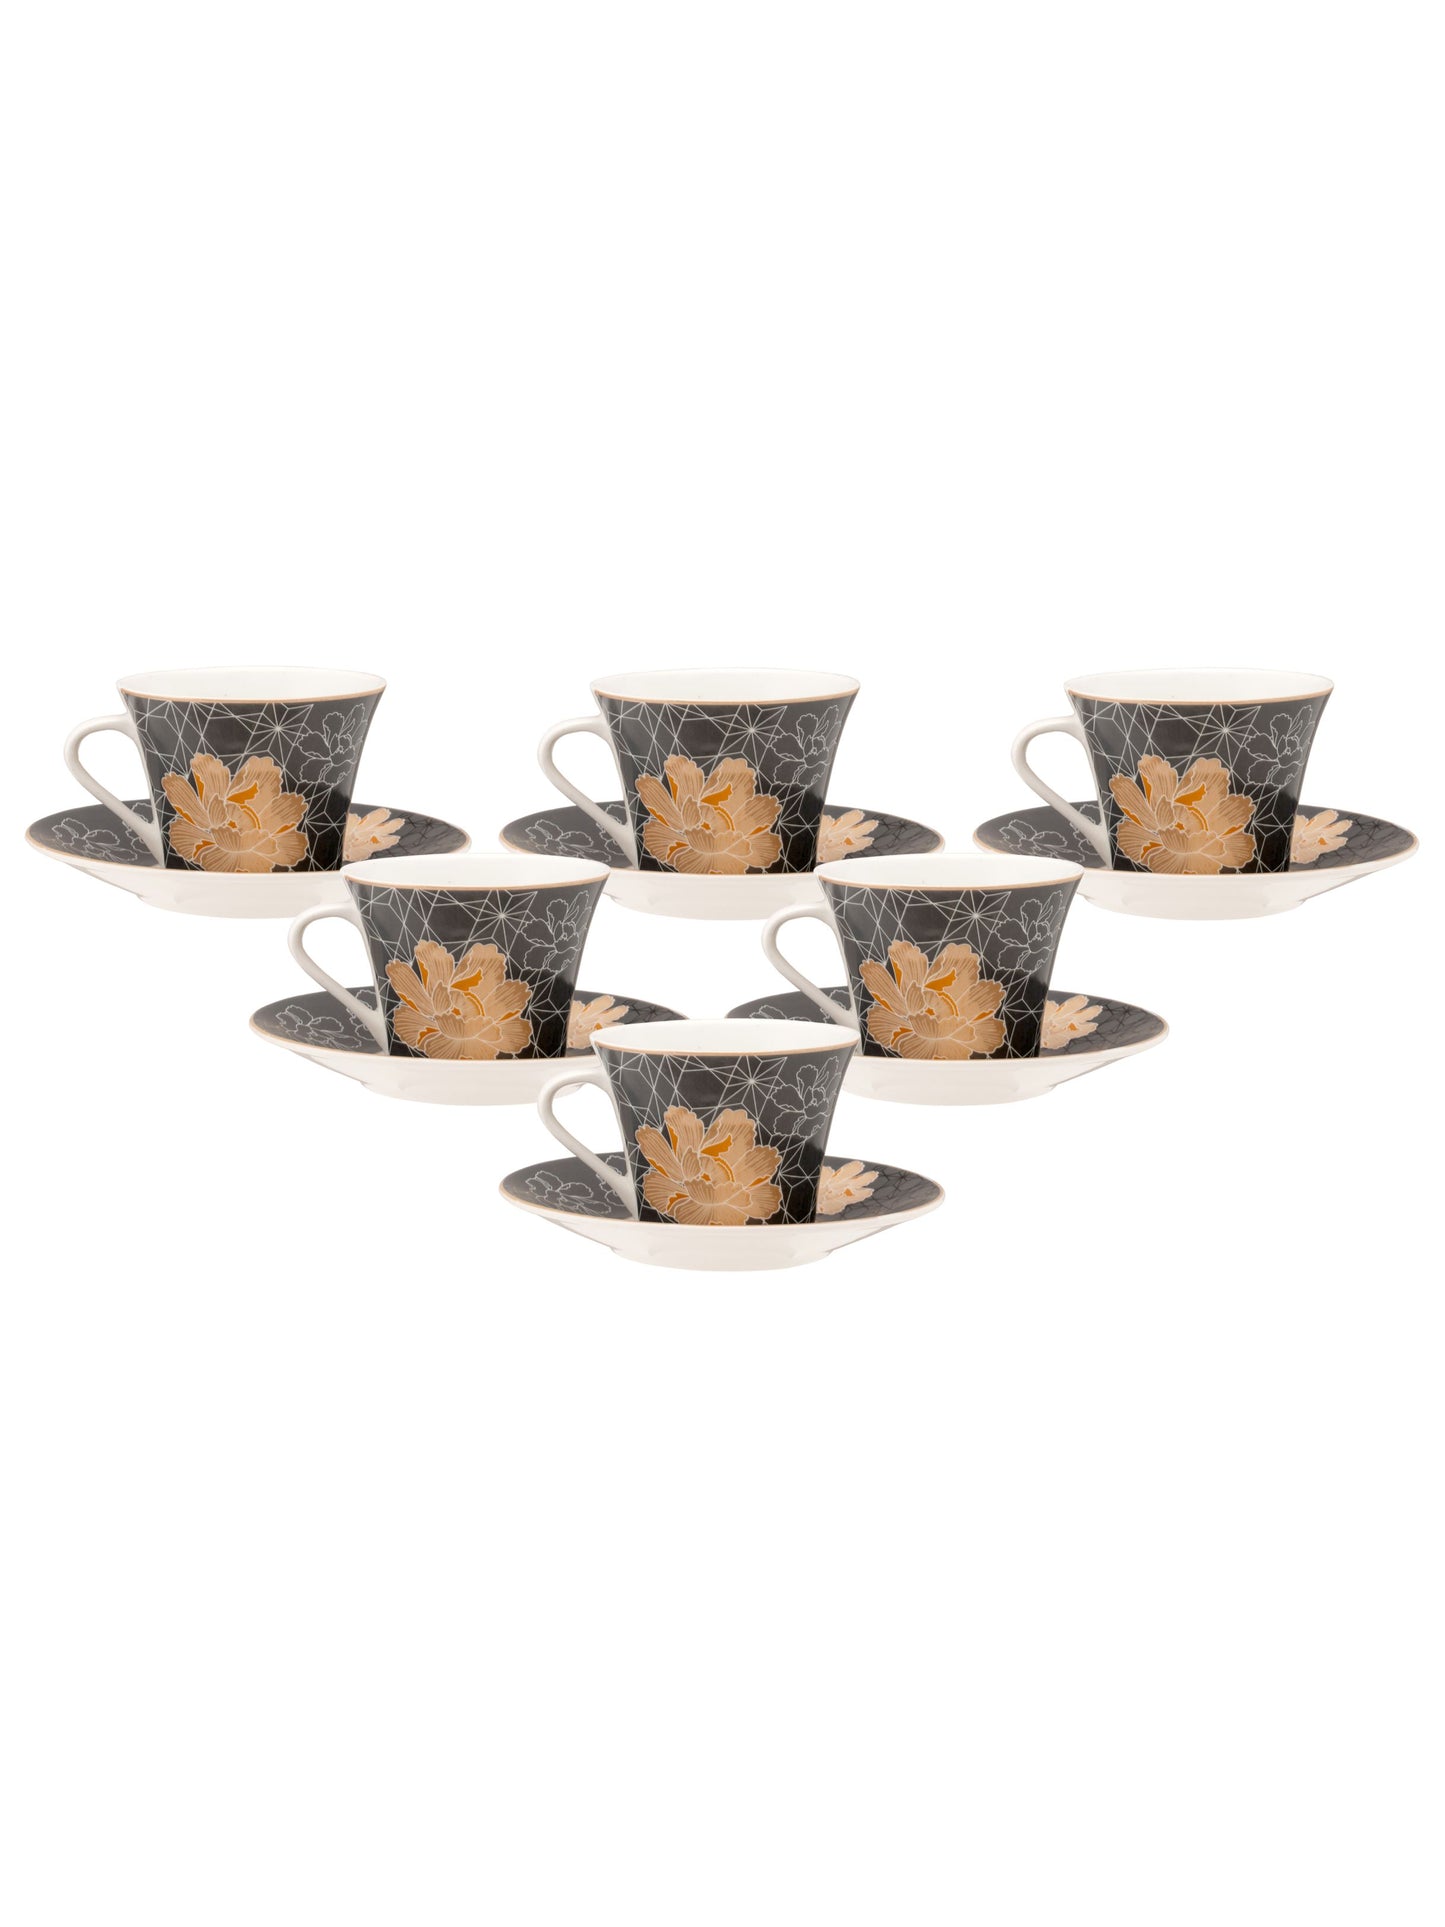 JCPL Gorge Gardenia Cup & Saucer, 210ml, Set of 12 (6 Cups + 6 Saucers) (GS308)